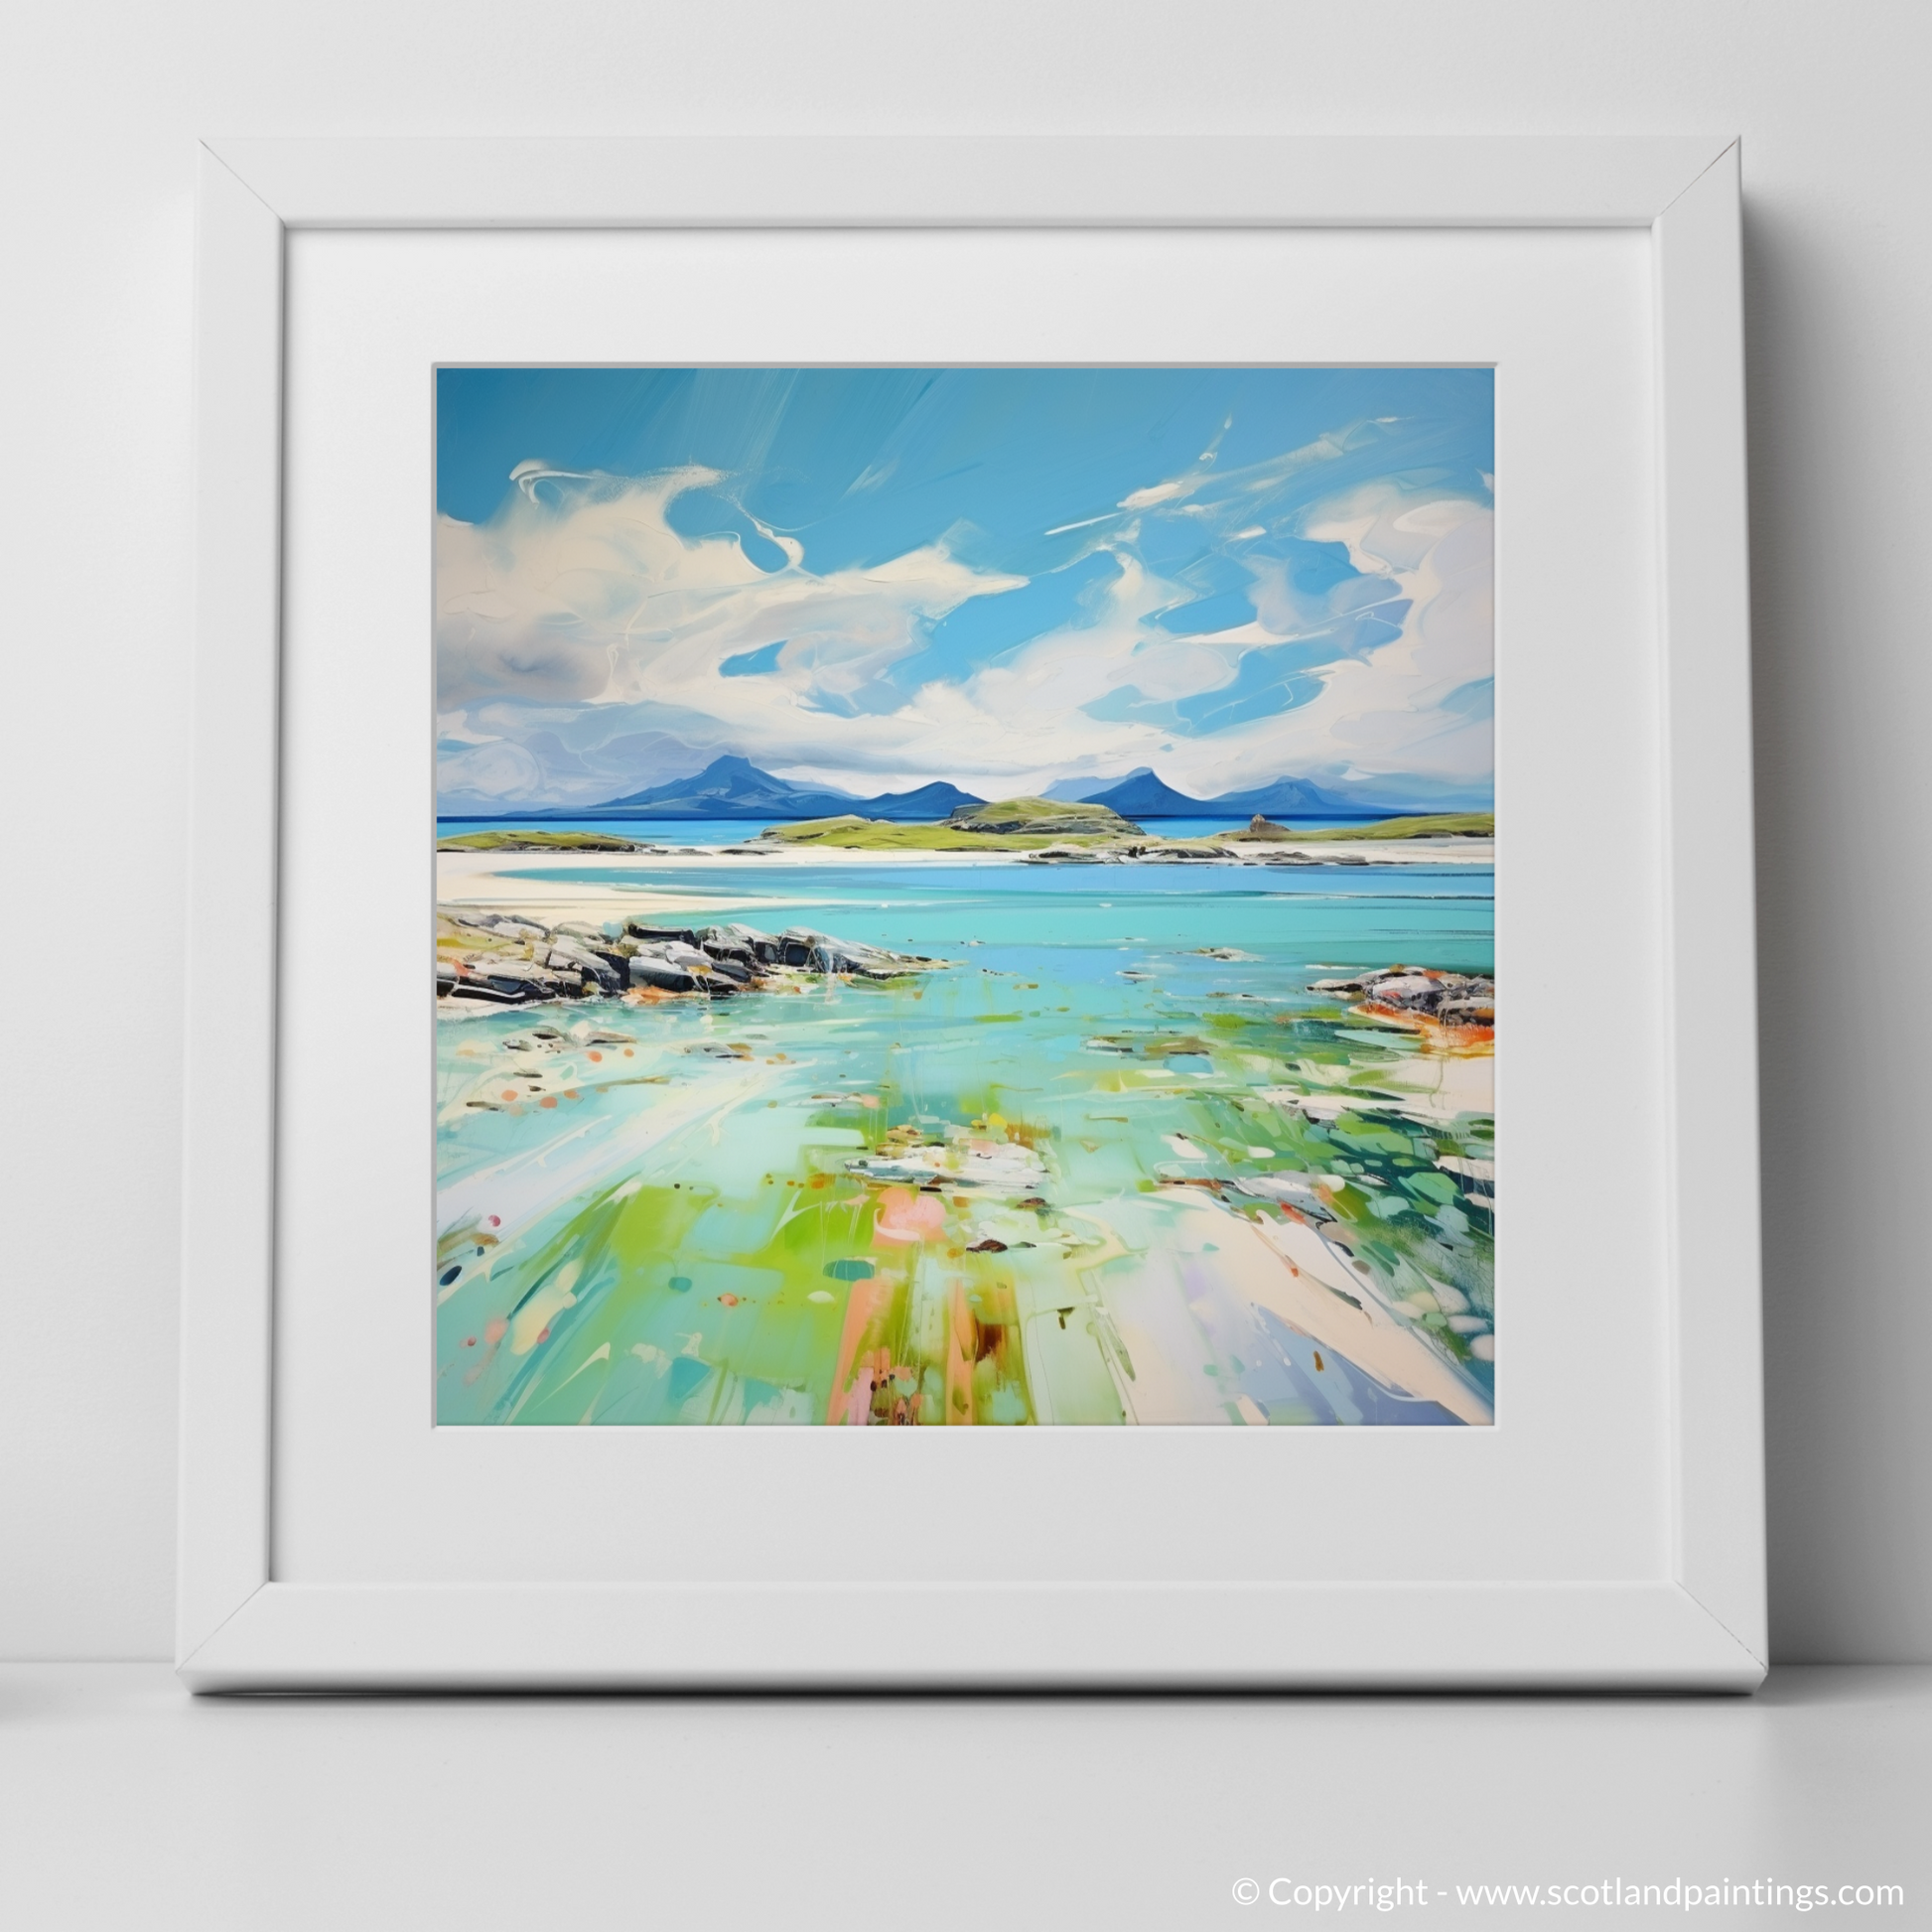 Art Print of Isle of Jura, Inner Hebrides in summer with a white frame